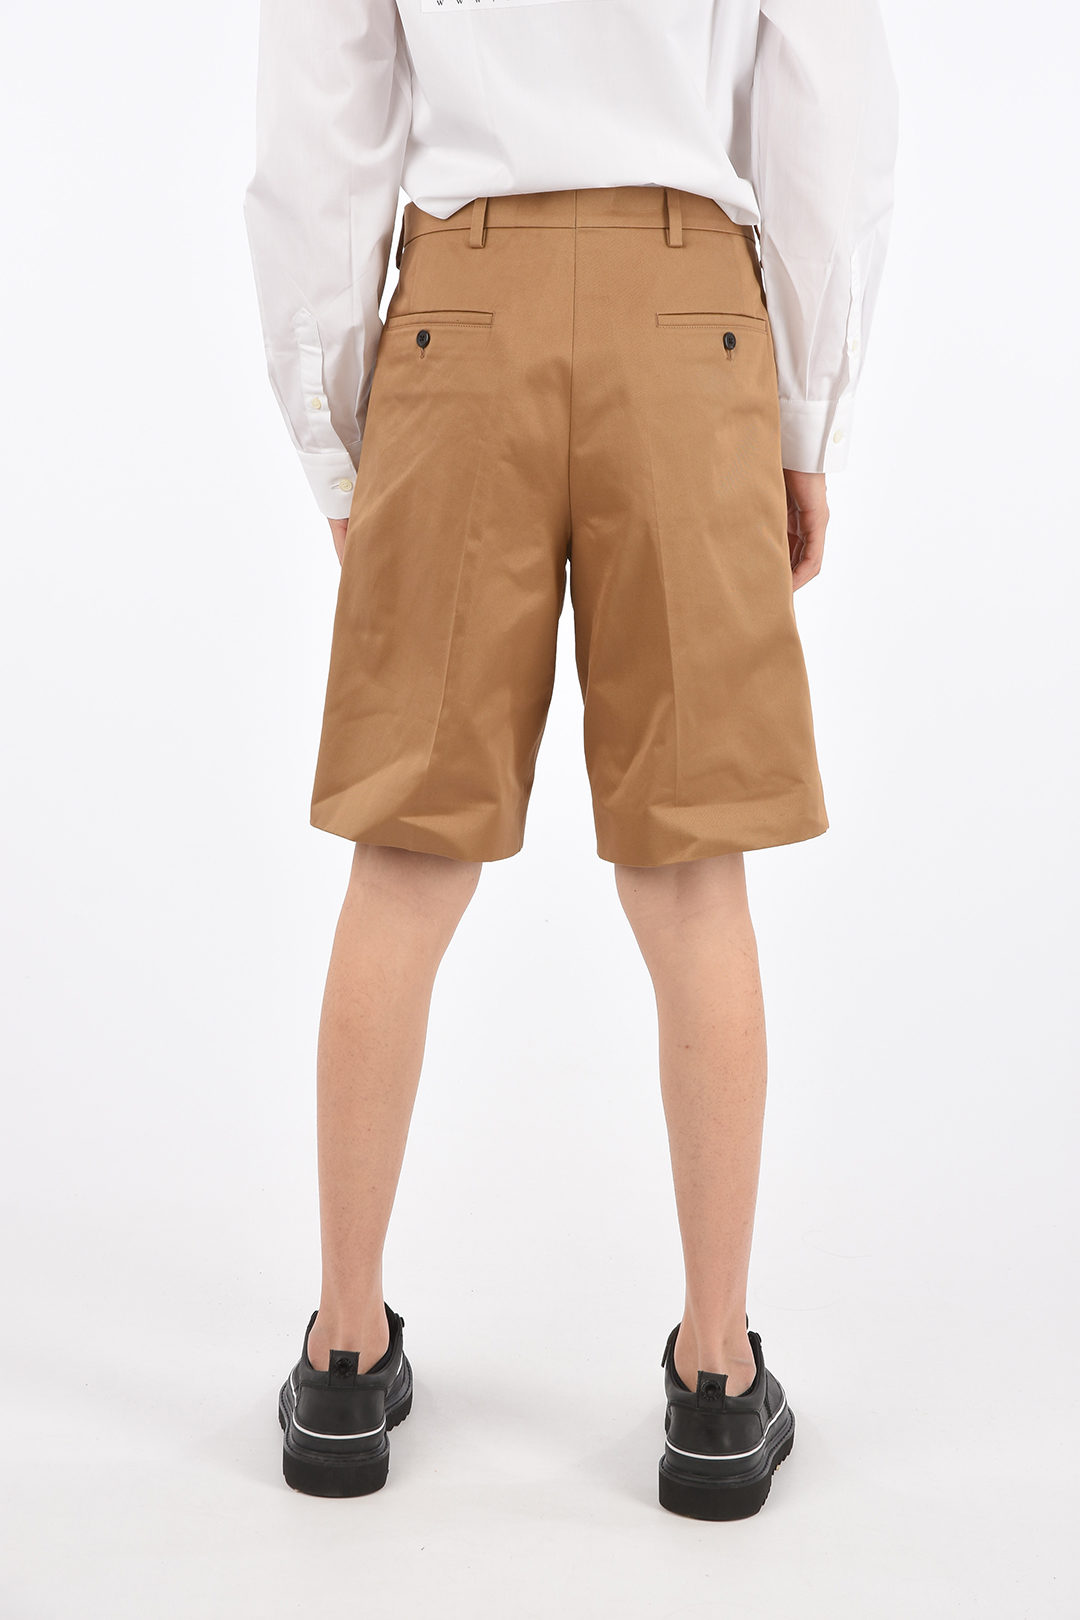 Prada Hidden Closure Single Pleat Shorts men - Glamood Outlet